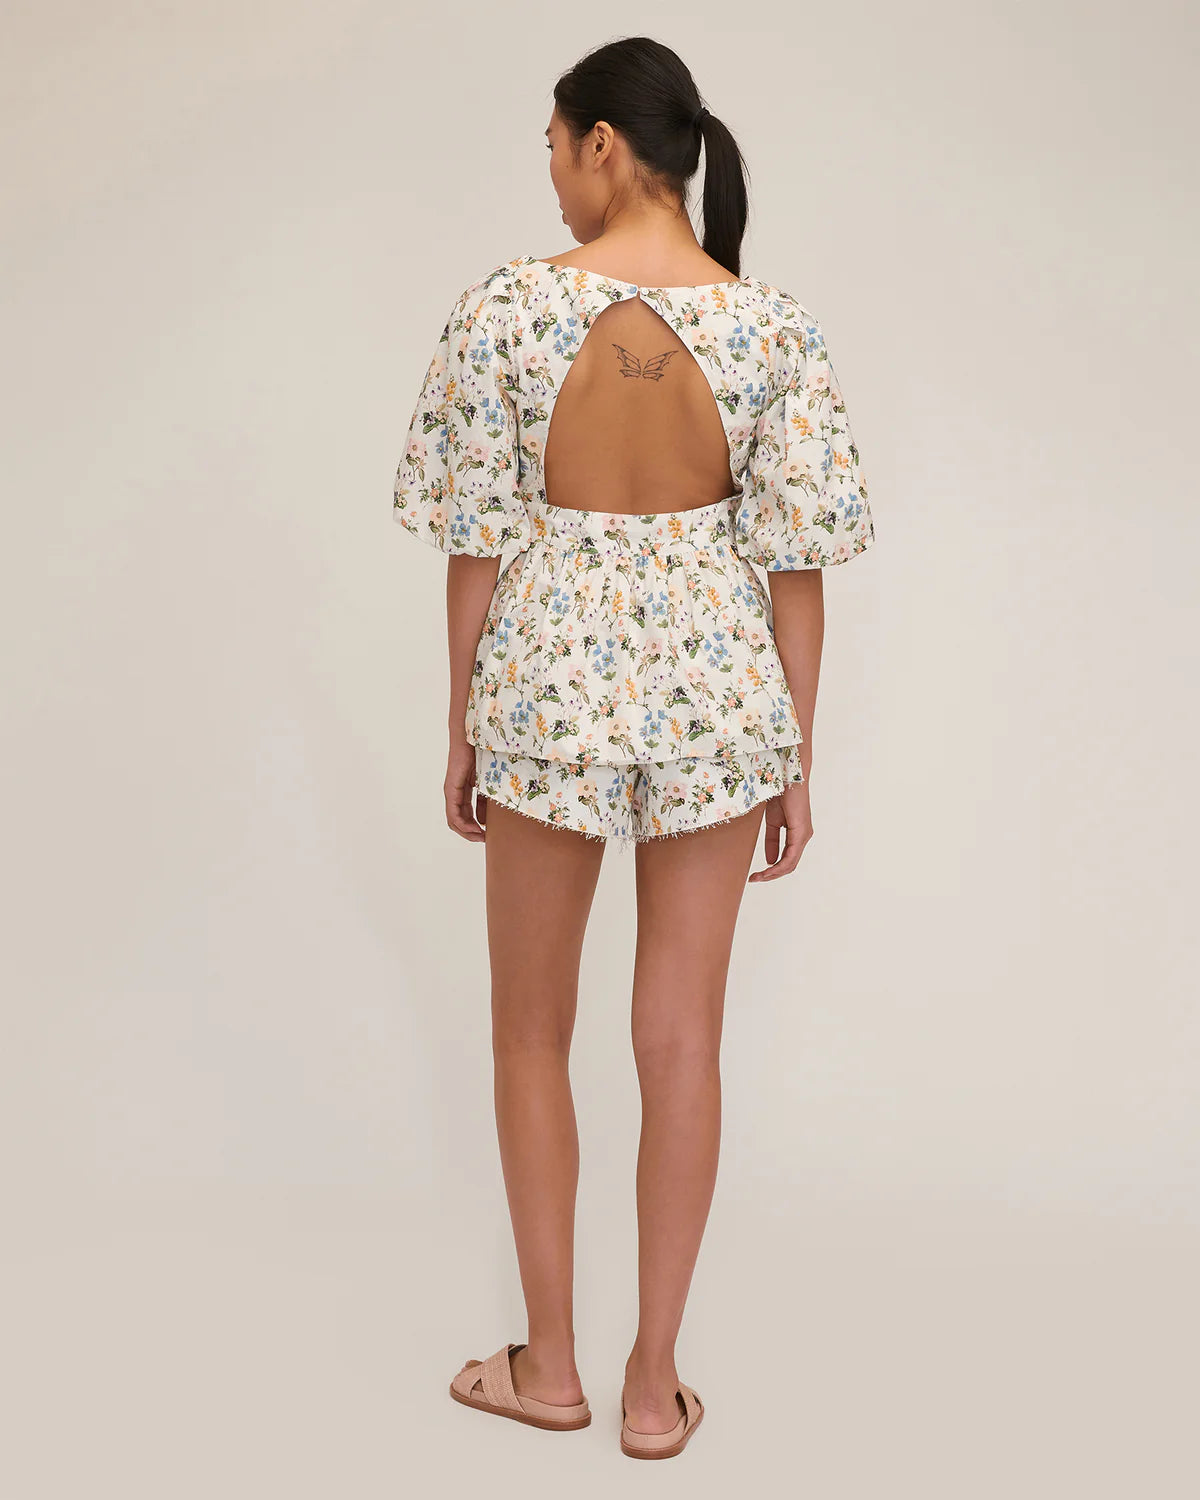 Marissa Webb Griffin Floral Open Back Top, floral print, fun top, v-neck shirt, summer shirt, women's clothing